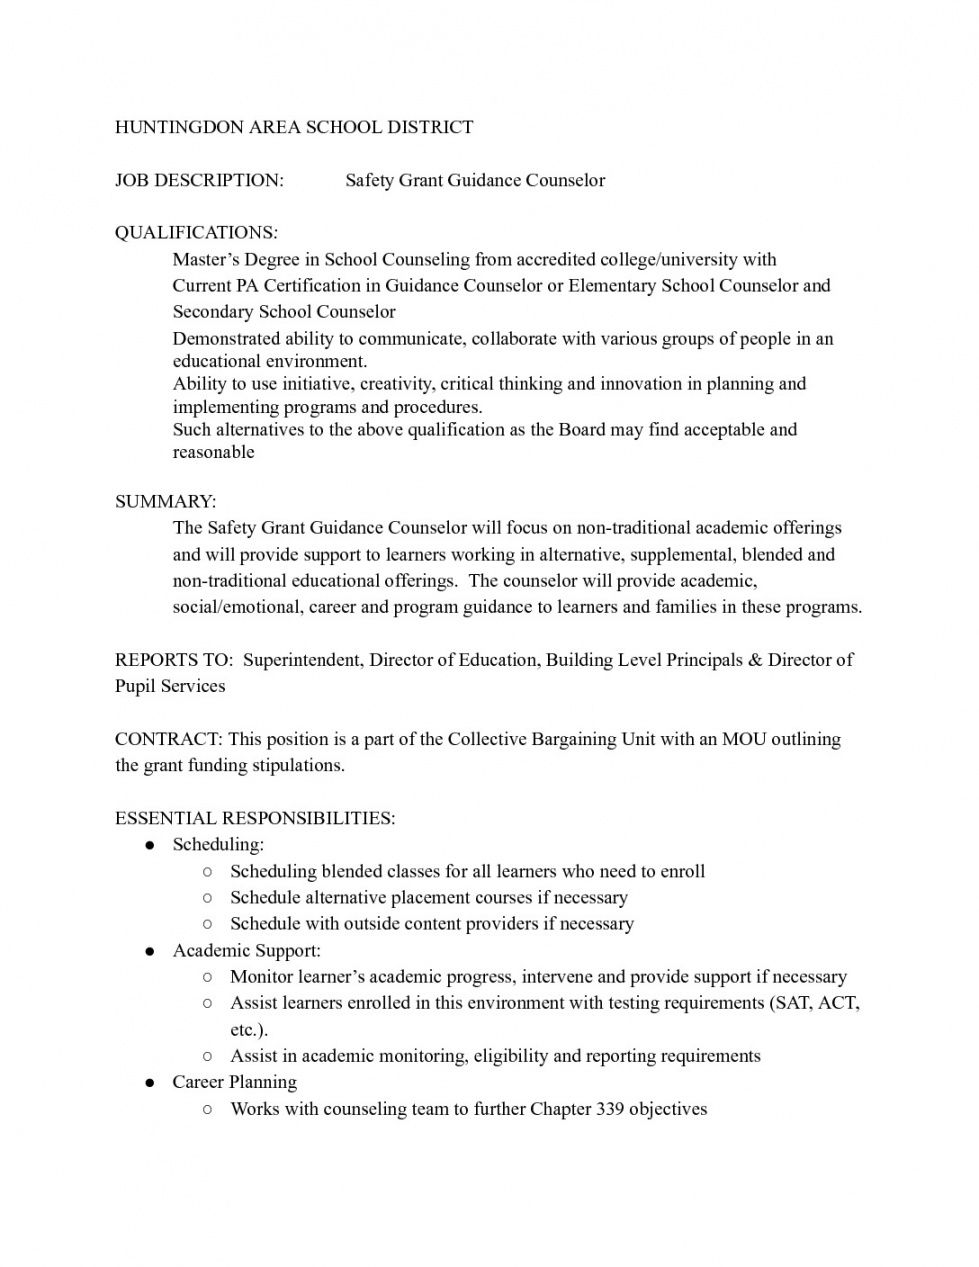 grant guidance counselor job description  google docs  huntingdon seek job description template and sample